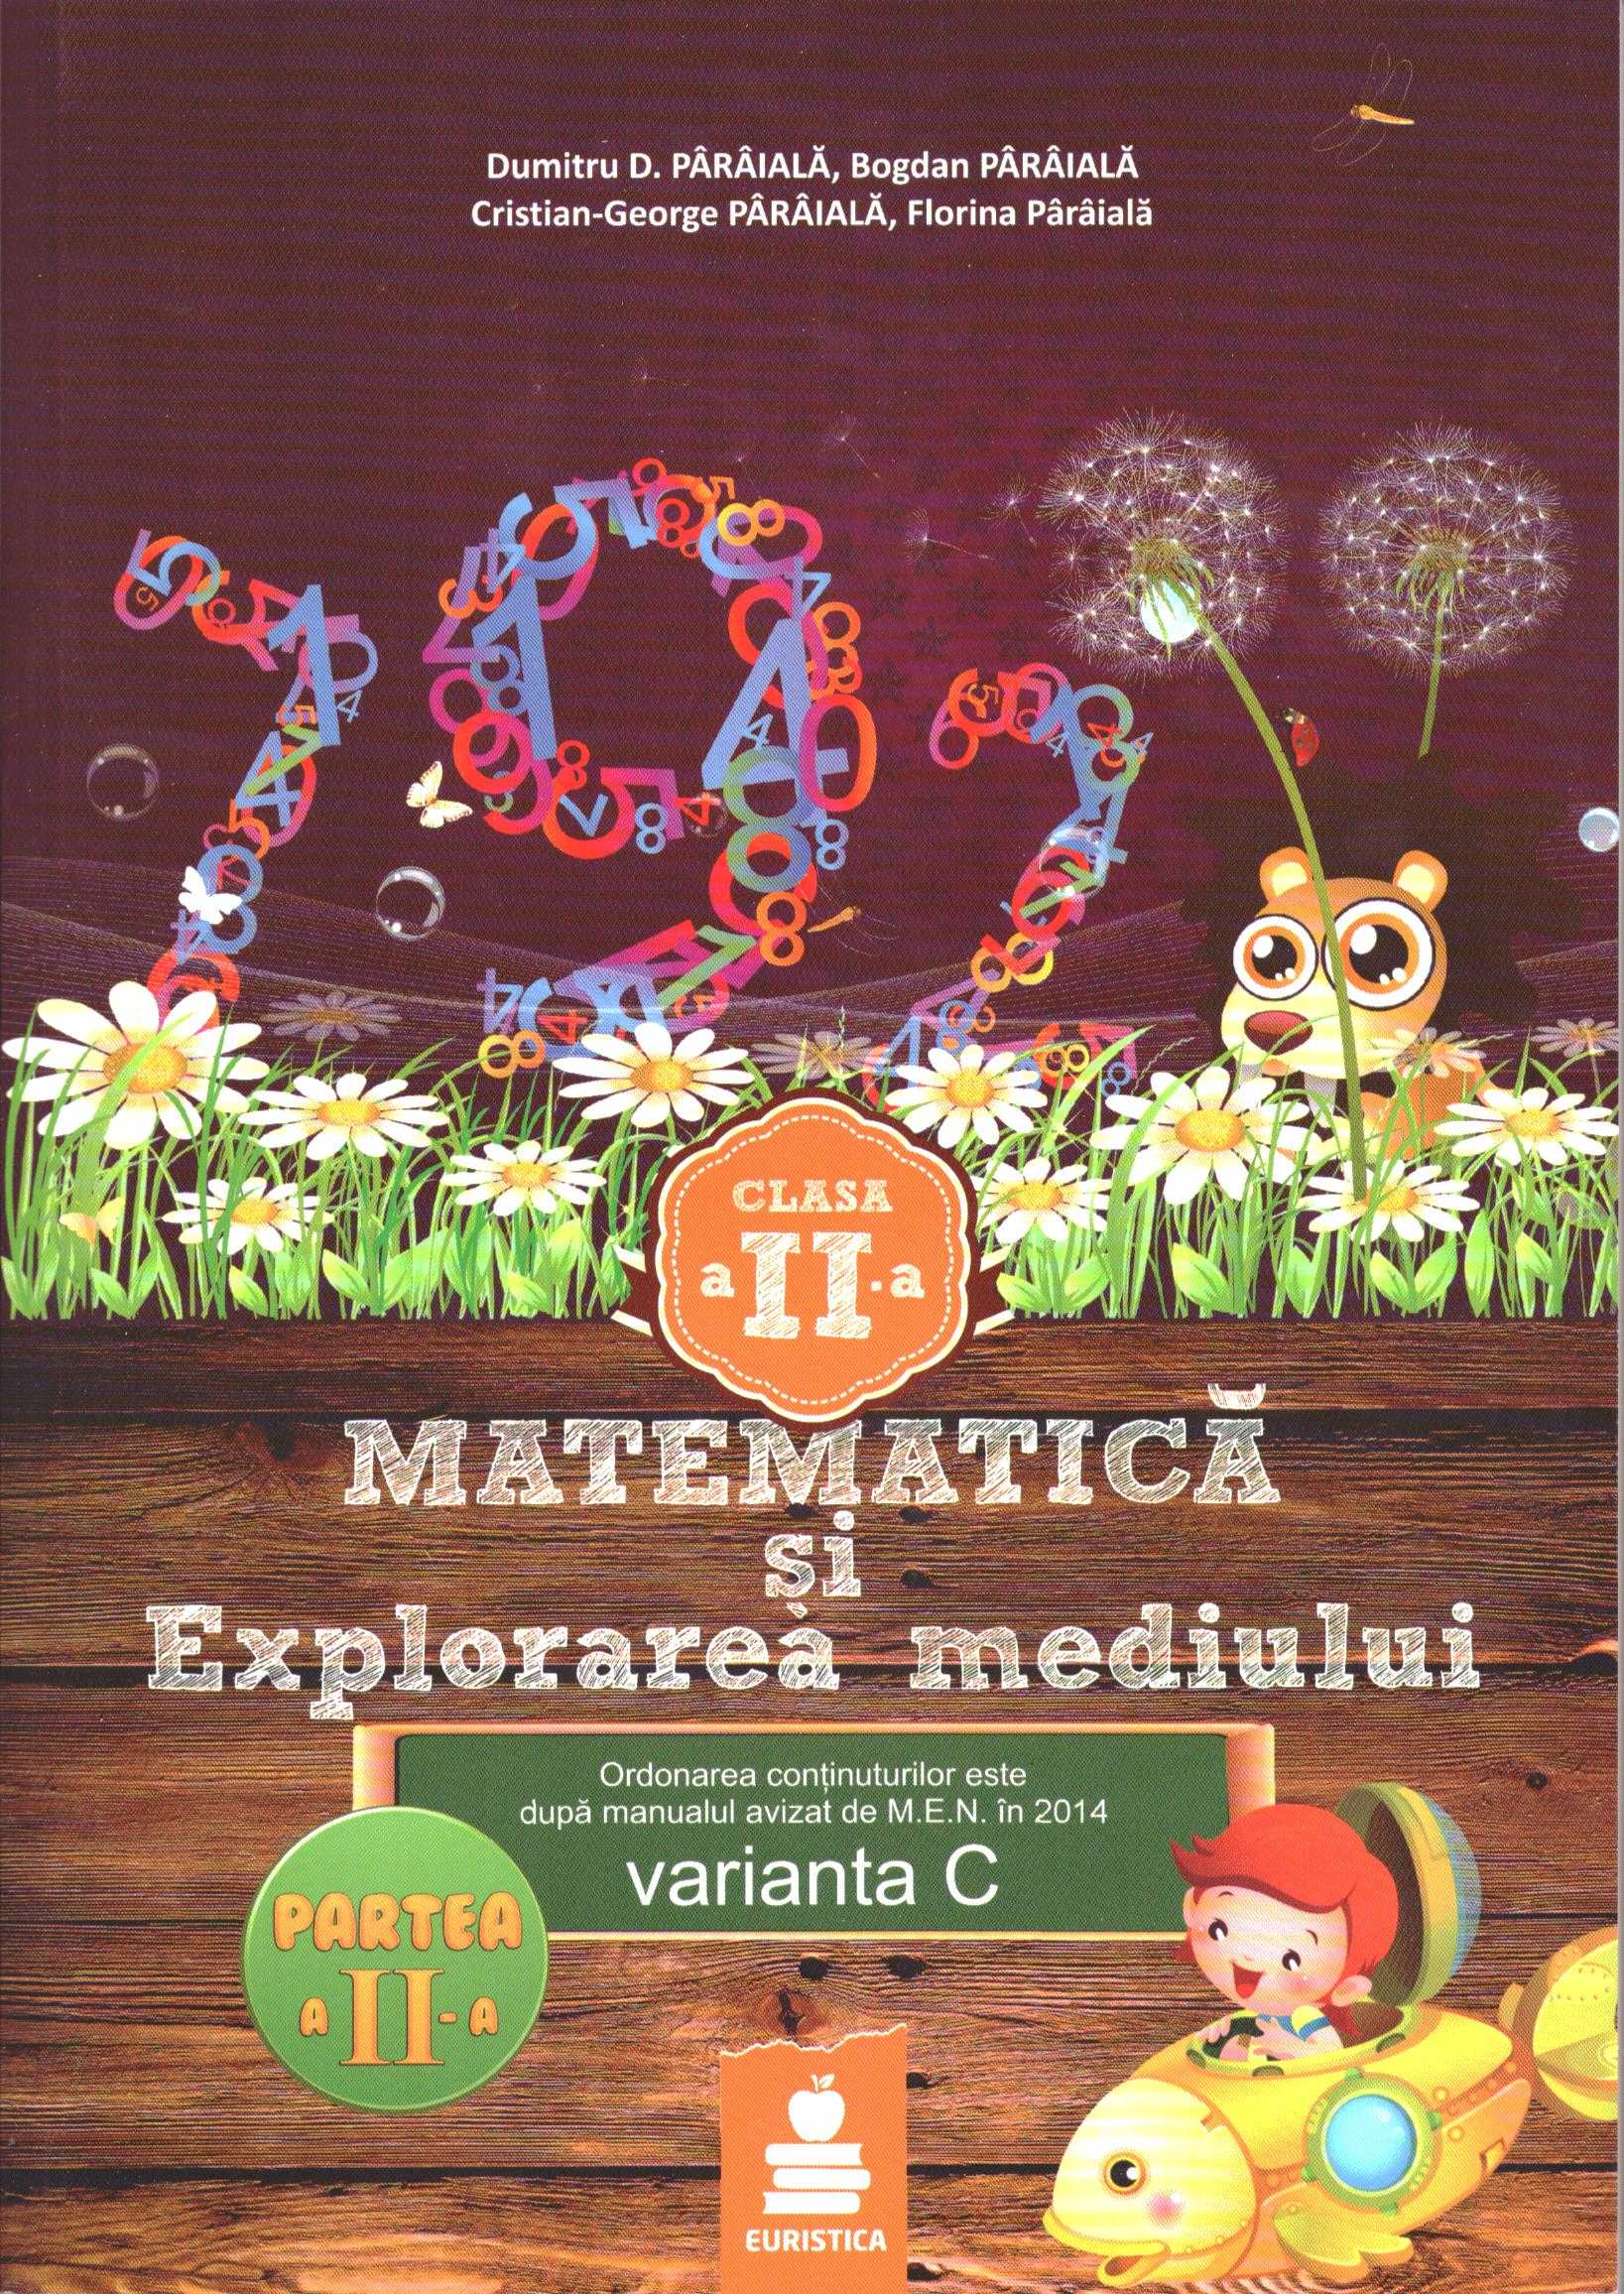 Matematica si explorarea mediului  - Clasa 2 - Partea A II-A - Varianta C - Ed.2015  - Dumitru D. Paraiala